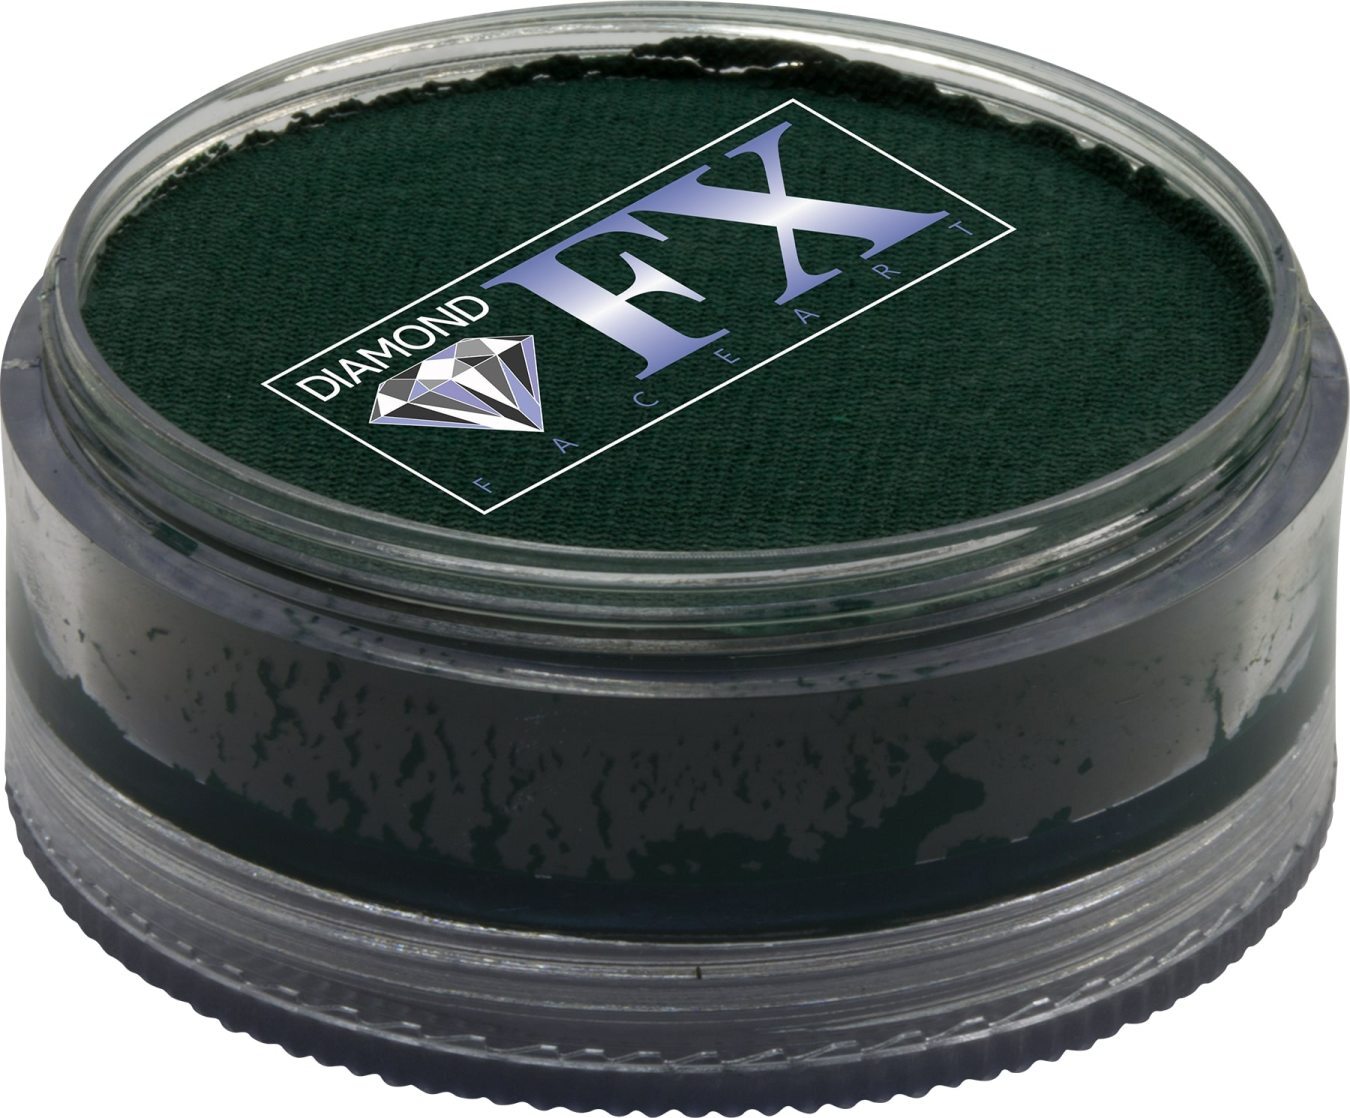 Diamond FX Dark Green 90g - Small Image